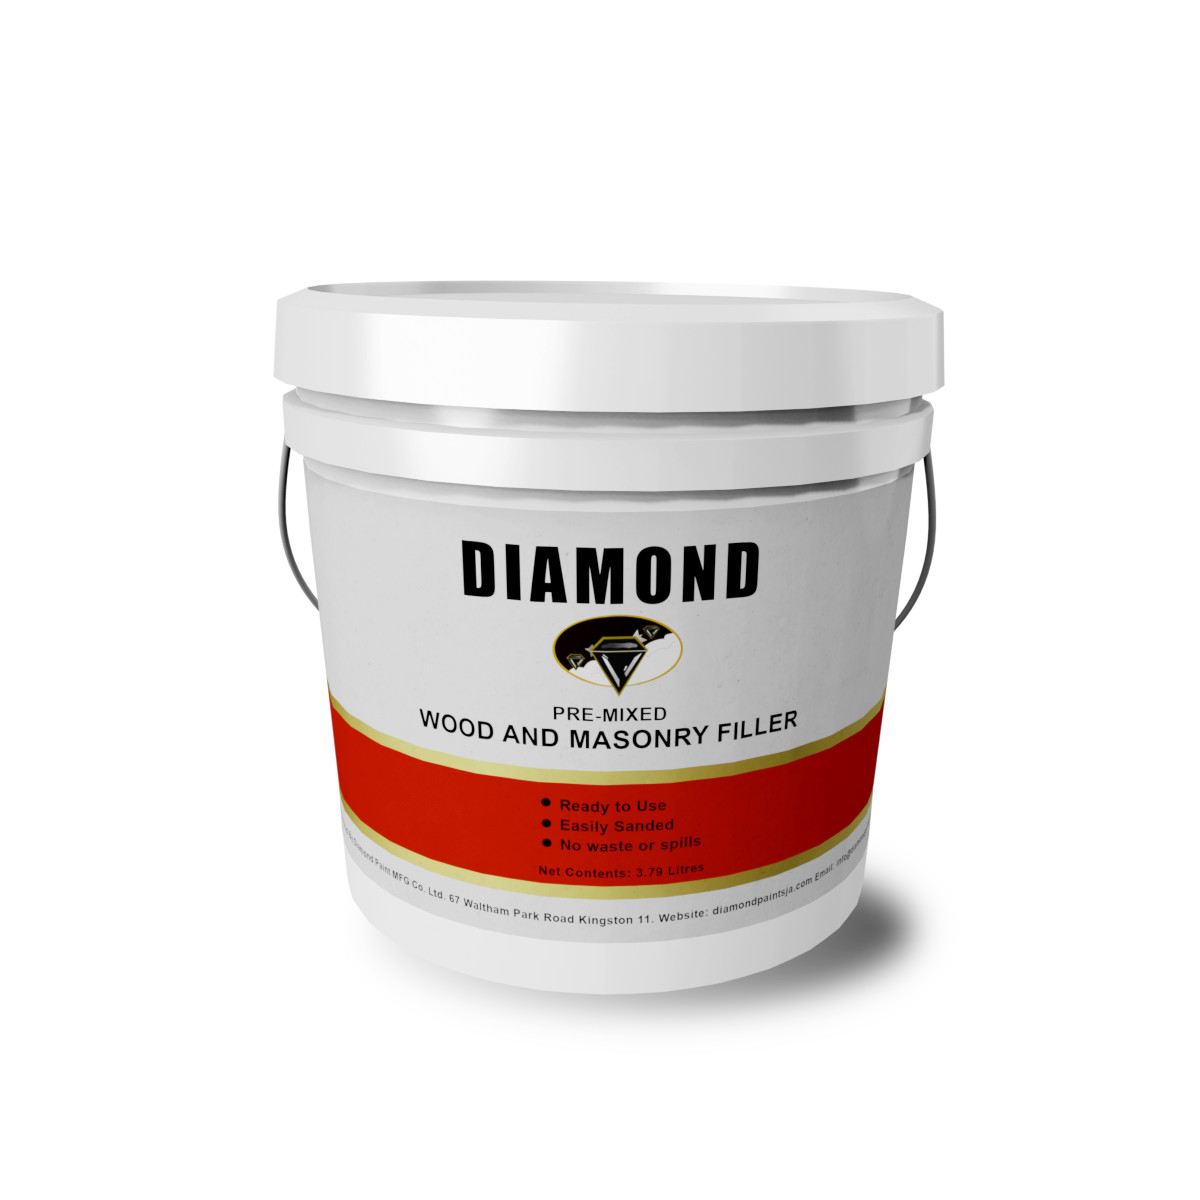 Diamond Woood and Masonry Filler Premixed Packaging